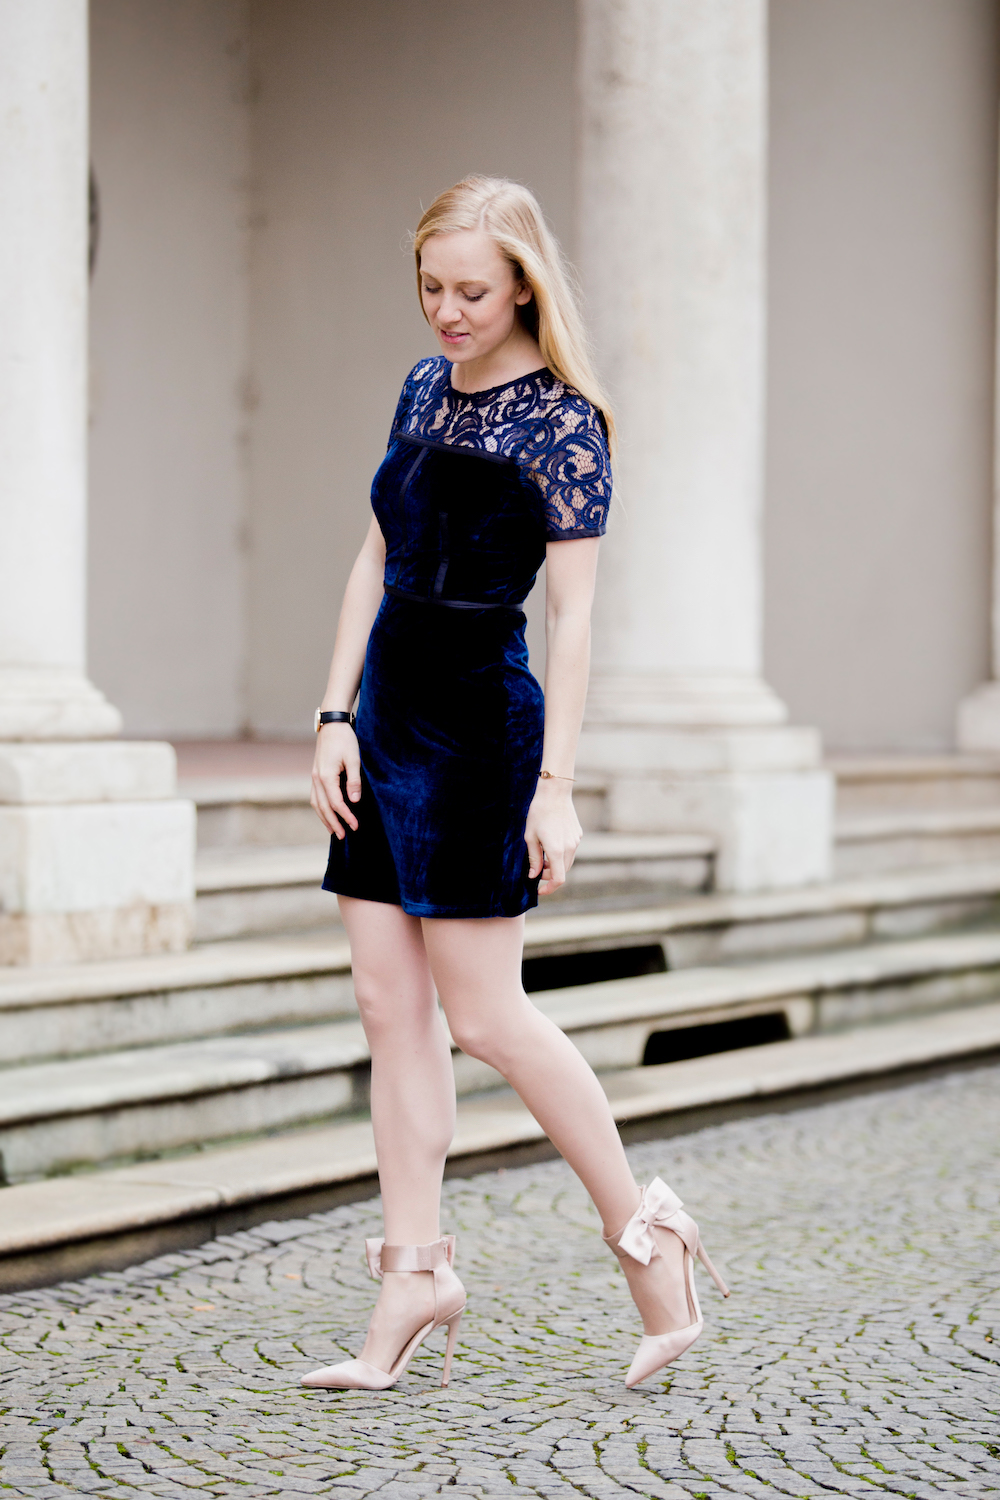 Millie Mackintosh dress, The Golden Bun | München Modeblog, German Fashion Blog, Fashionblogger, new trends